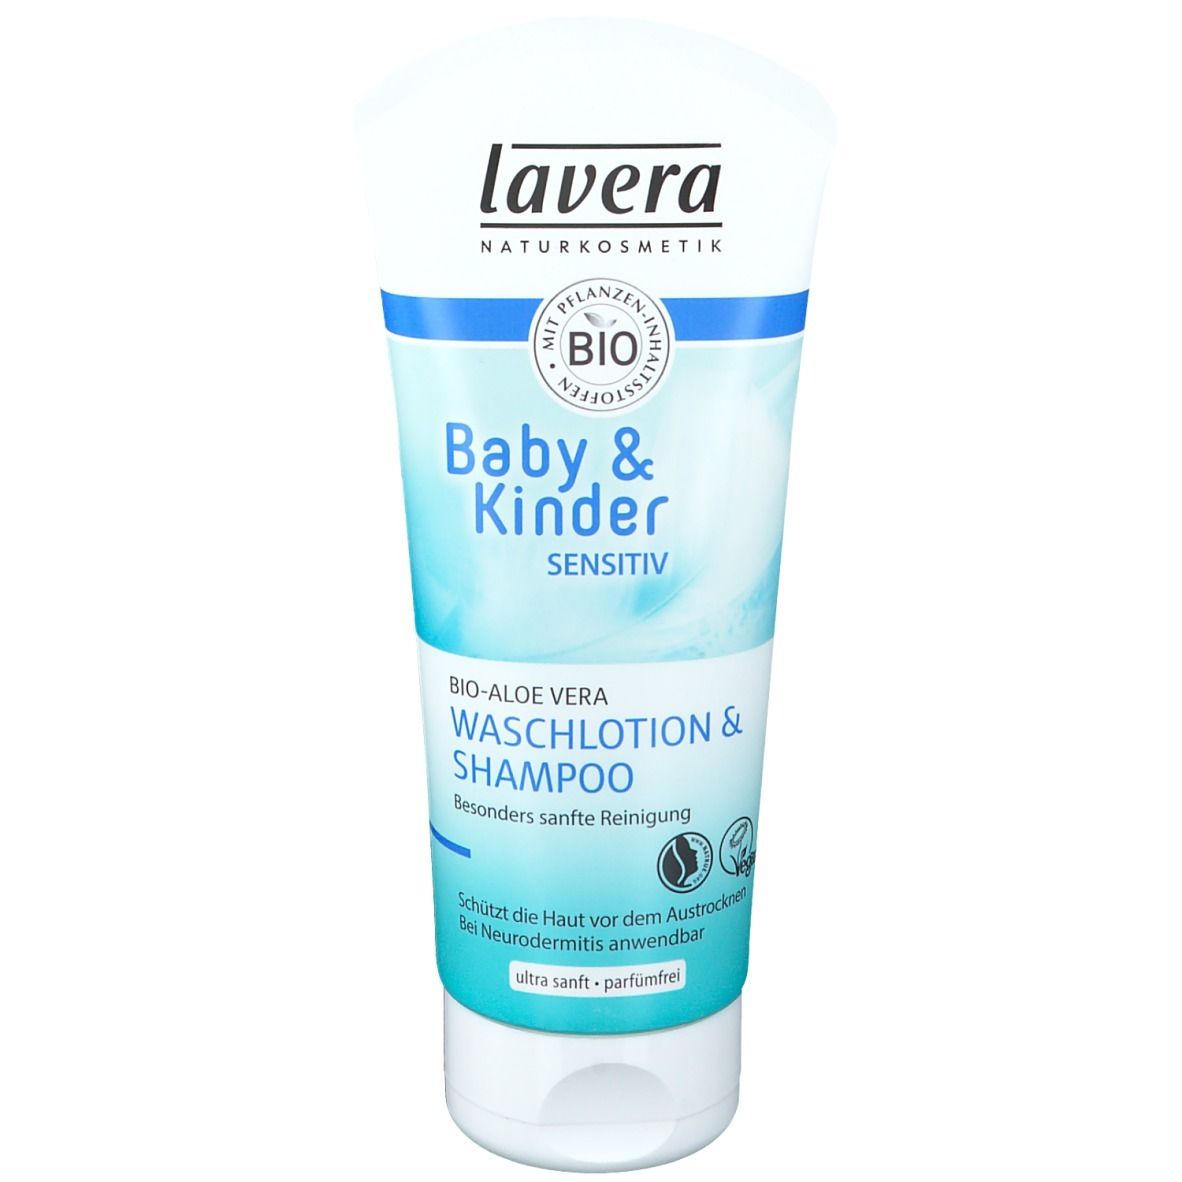 Image of lavera Baby & Kinder Neutral Waschlotion & Shampoo